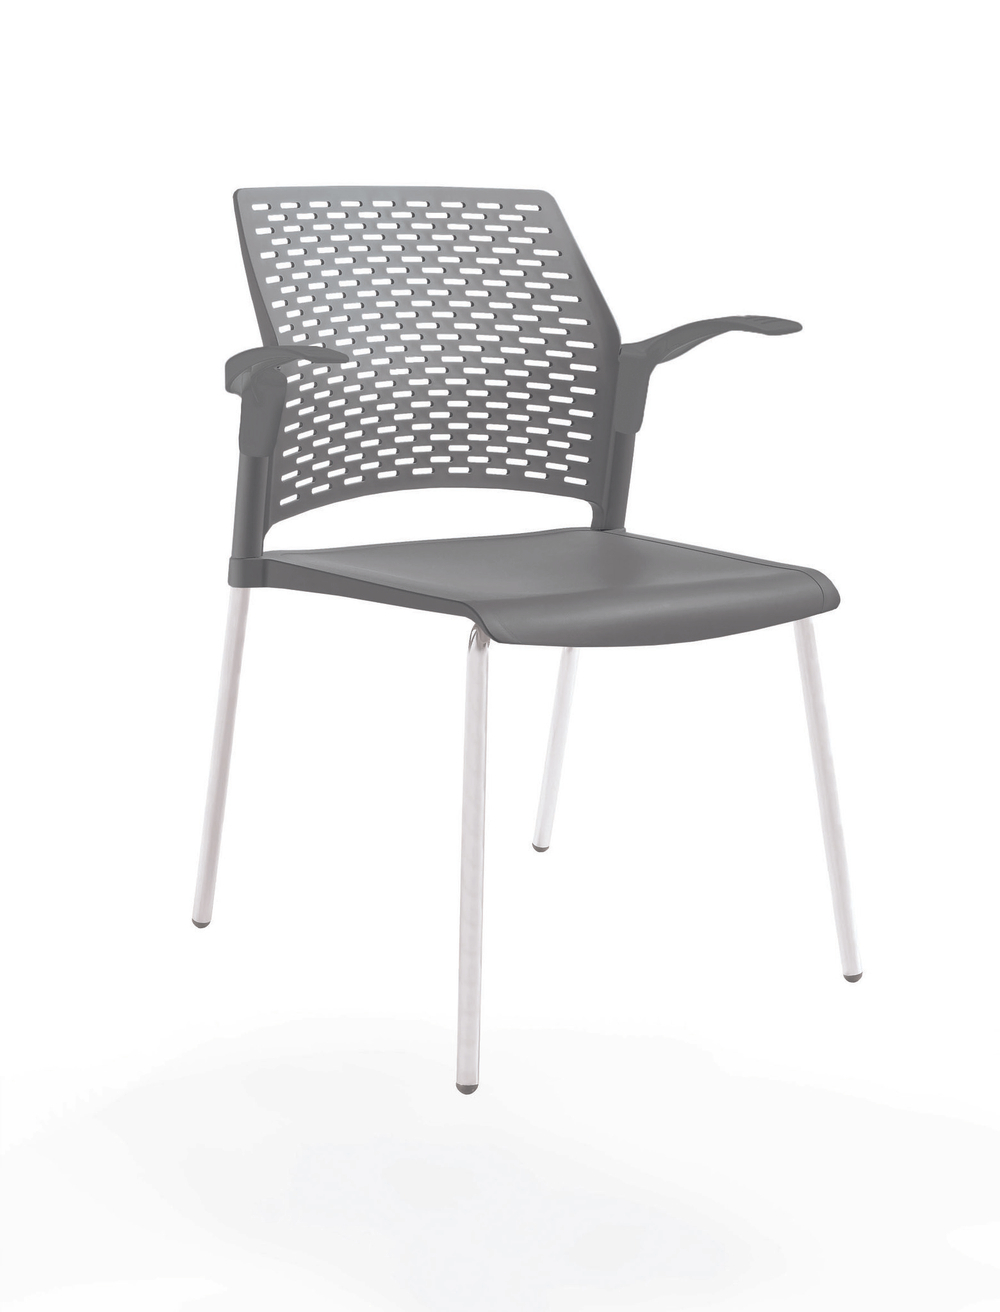 стул Rewind, каркас белый, пластик серый, с открытыми подлокотниками